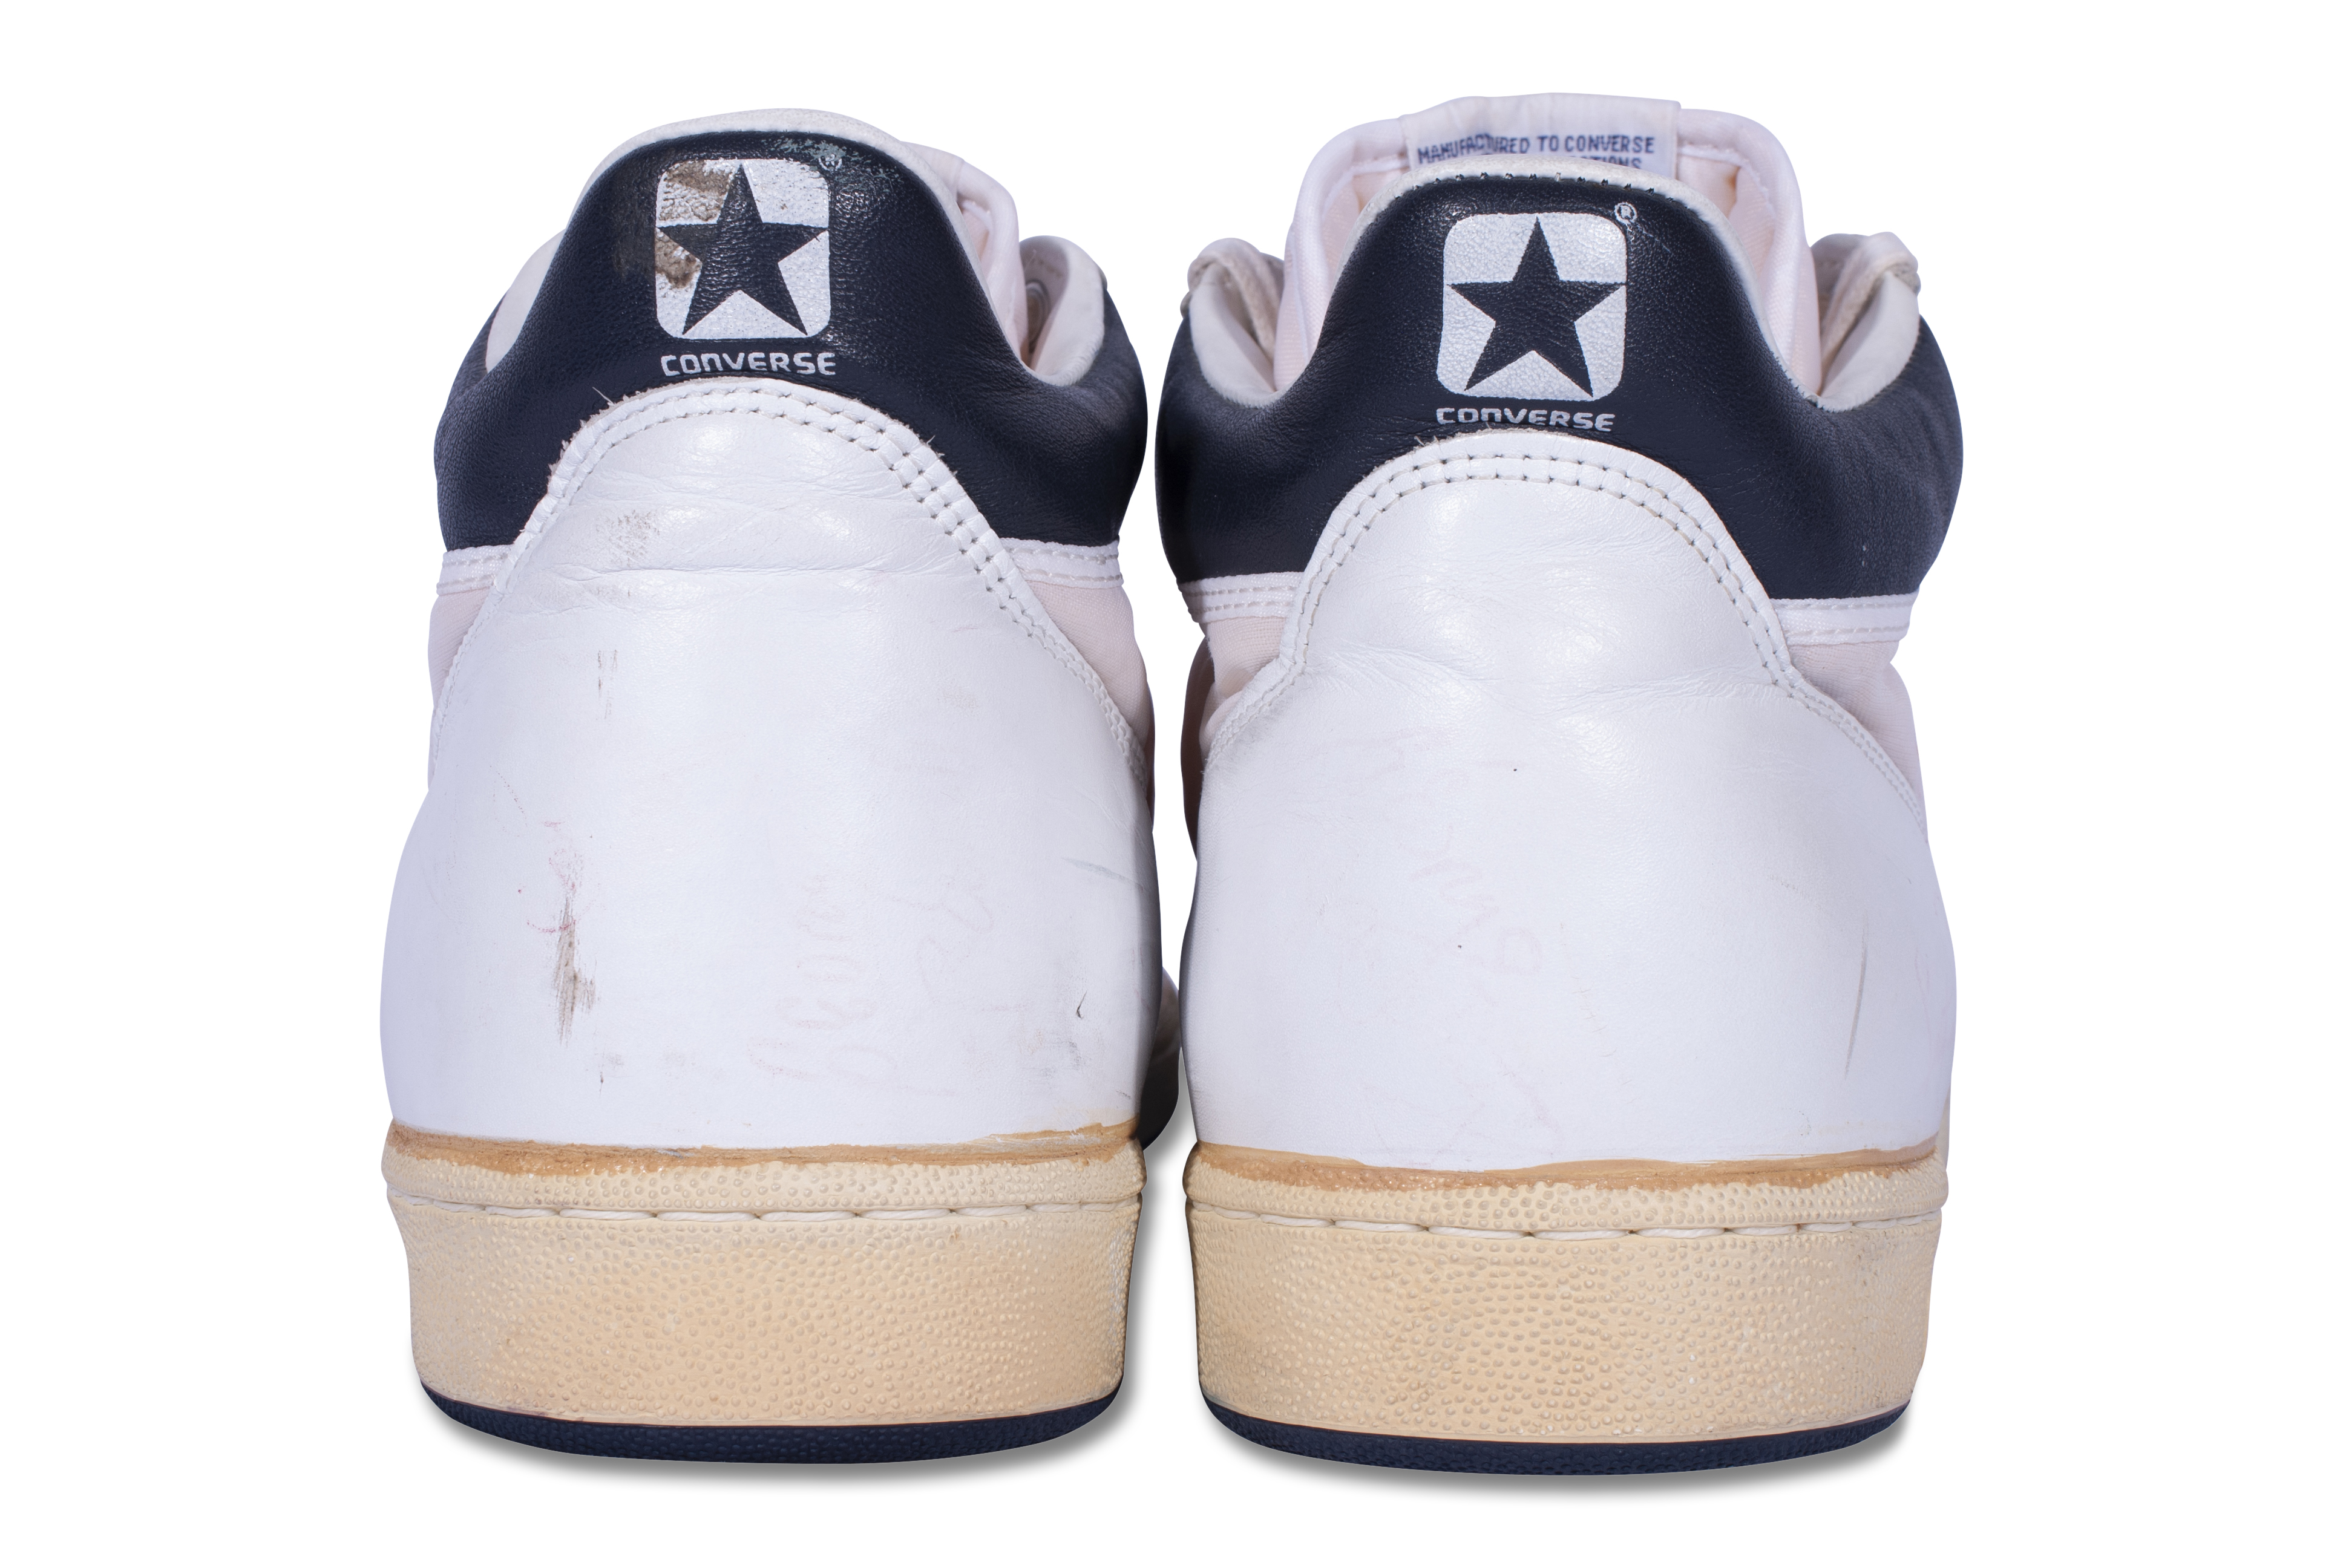 Basketball) Michael Jordan's game-worn Converse sneakers from 1984